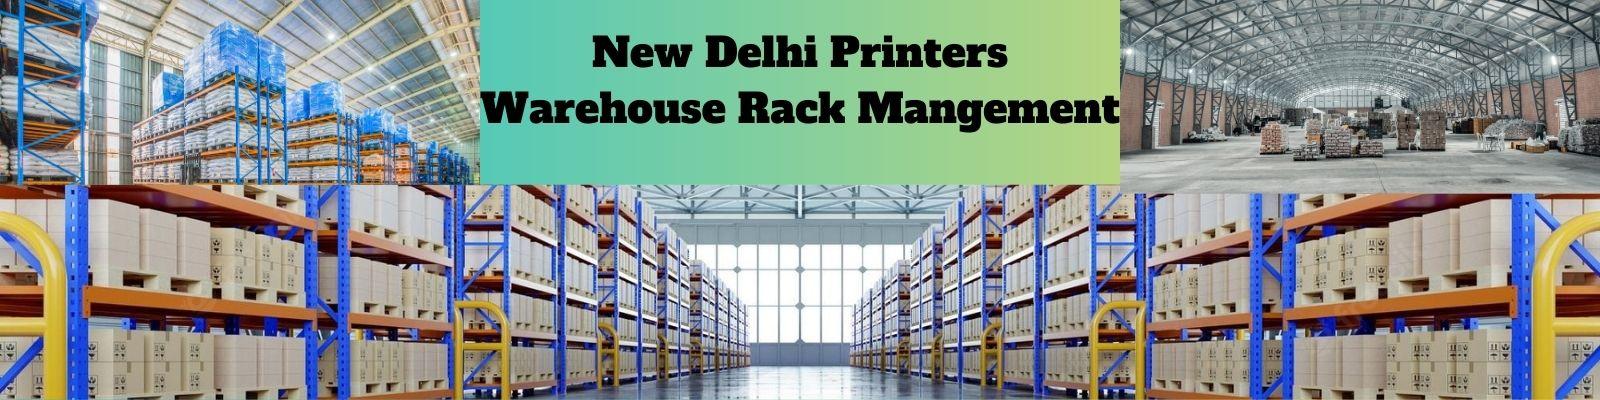 new delhi printers